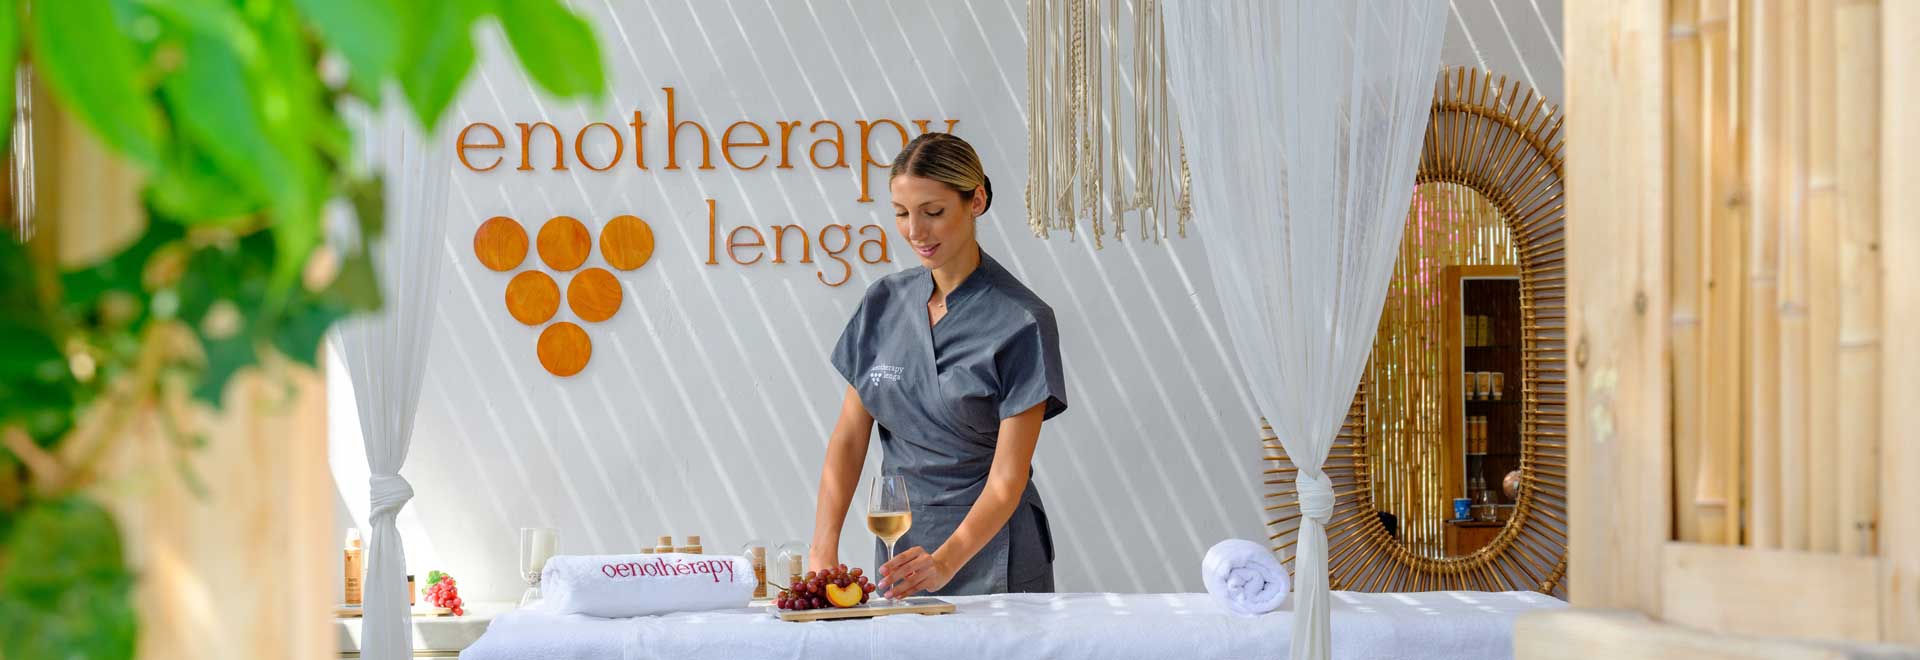 Lenga Oenotherapy Wellness Anhydrous Santorini